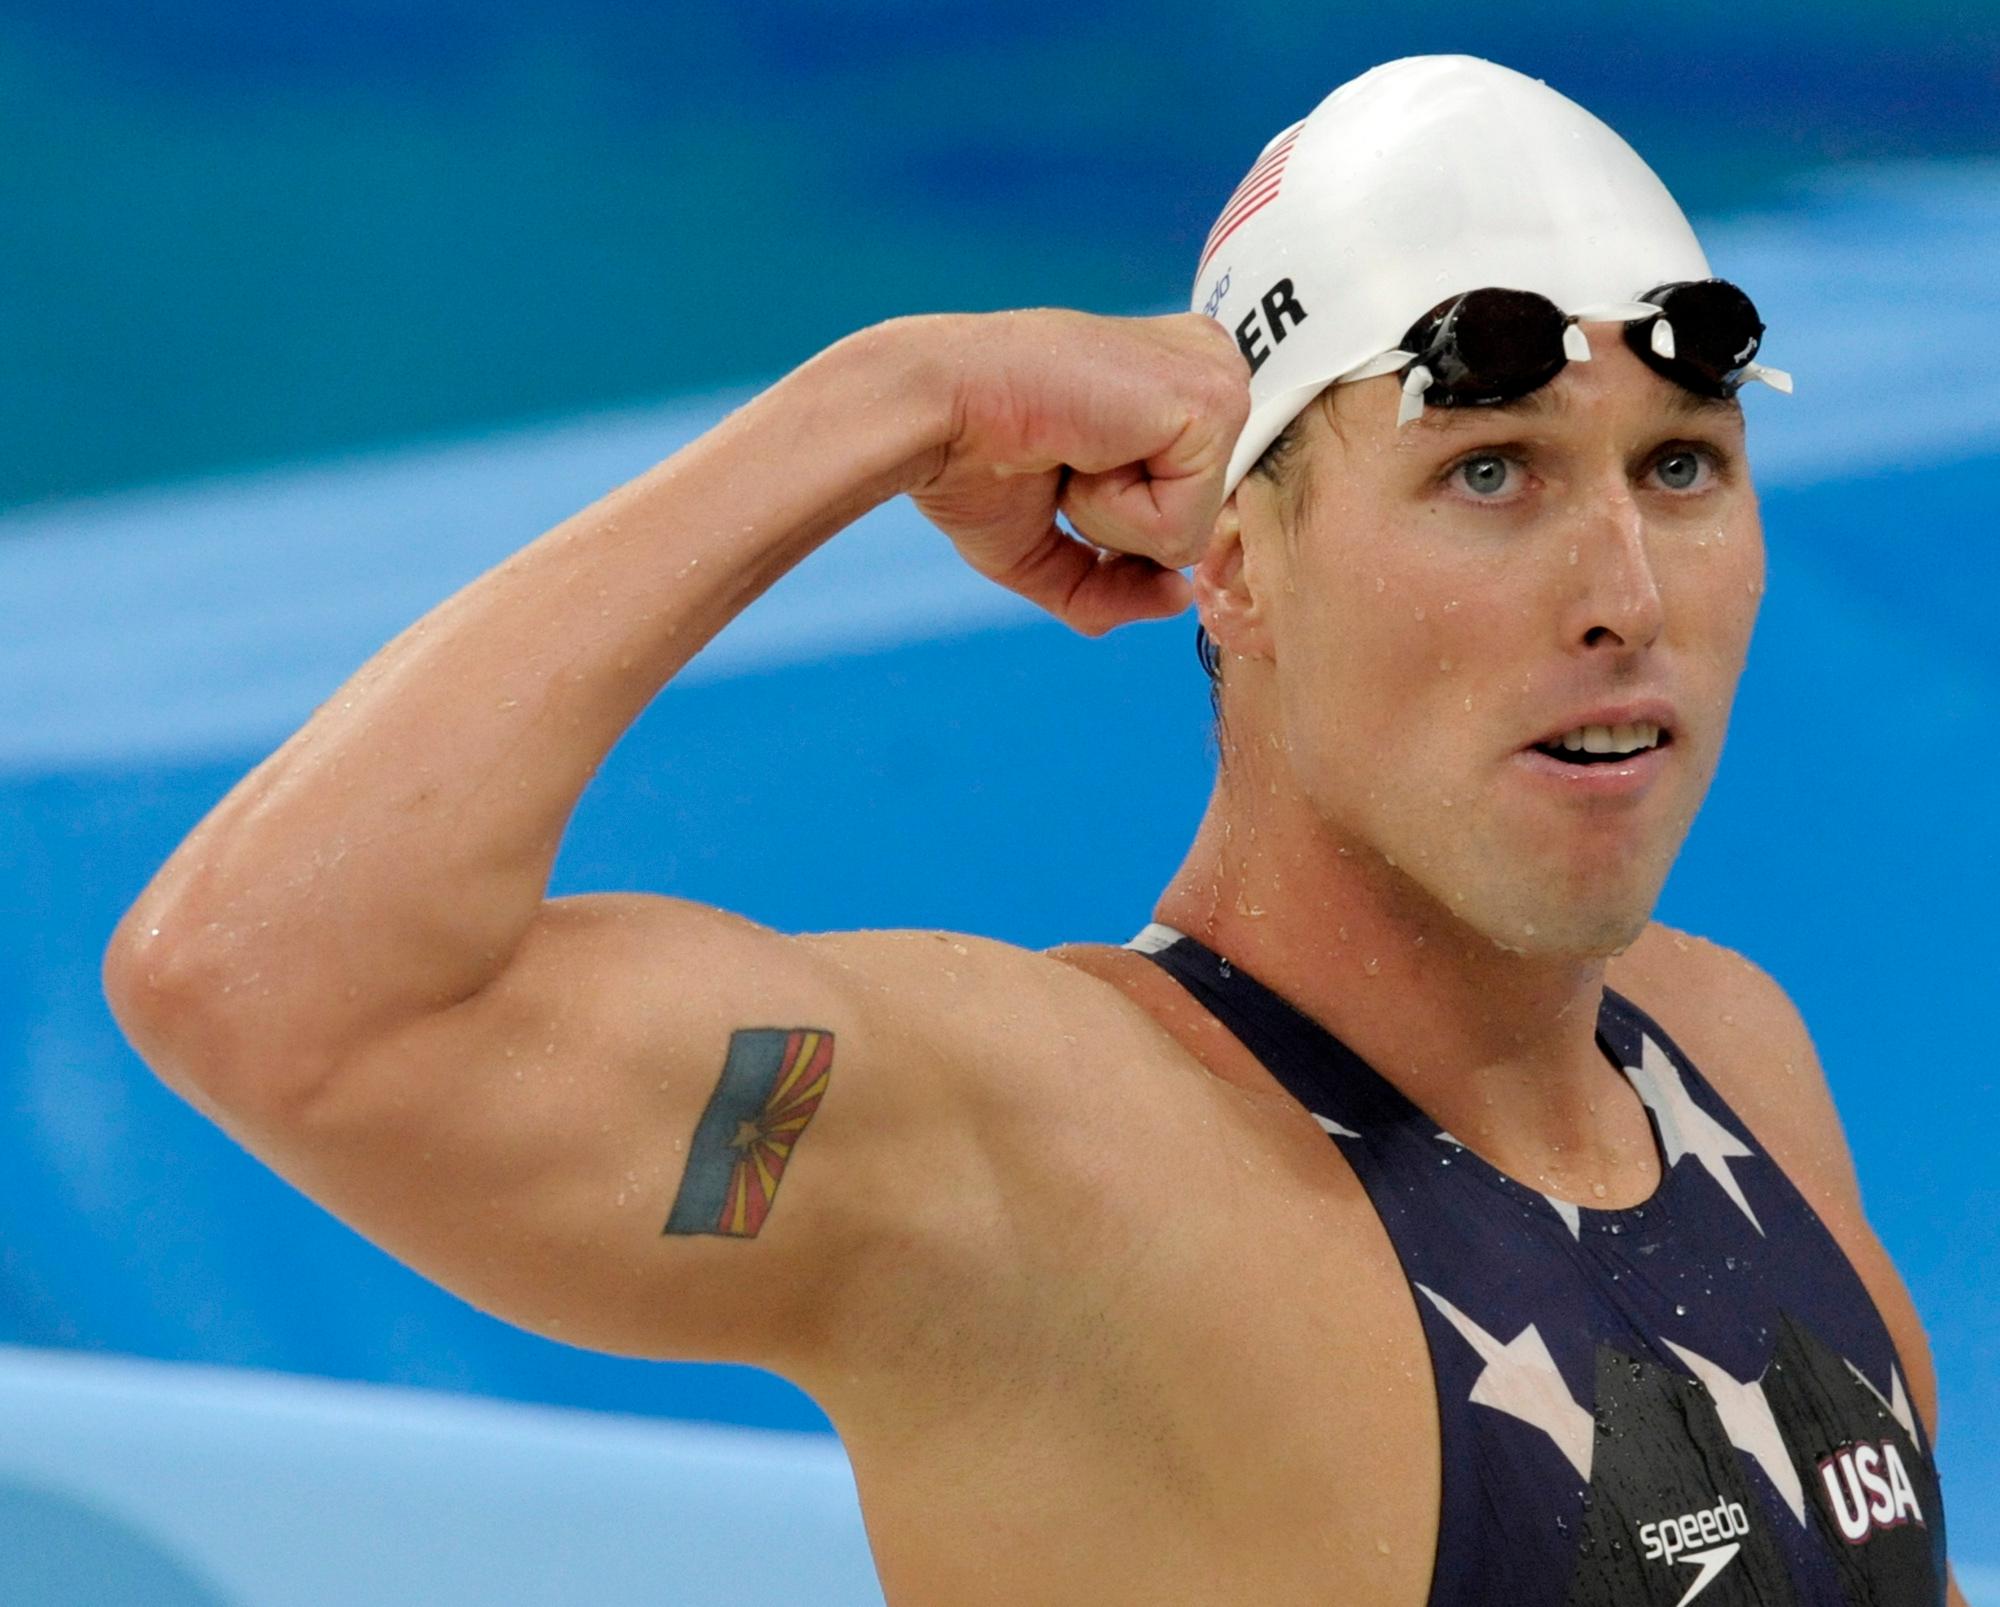 Olympic Swimming Medalist Klete Keller flexing bicep